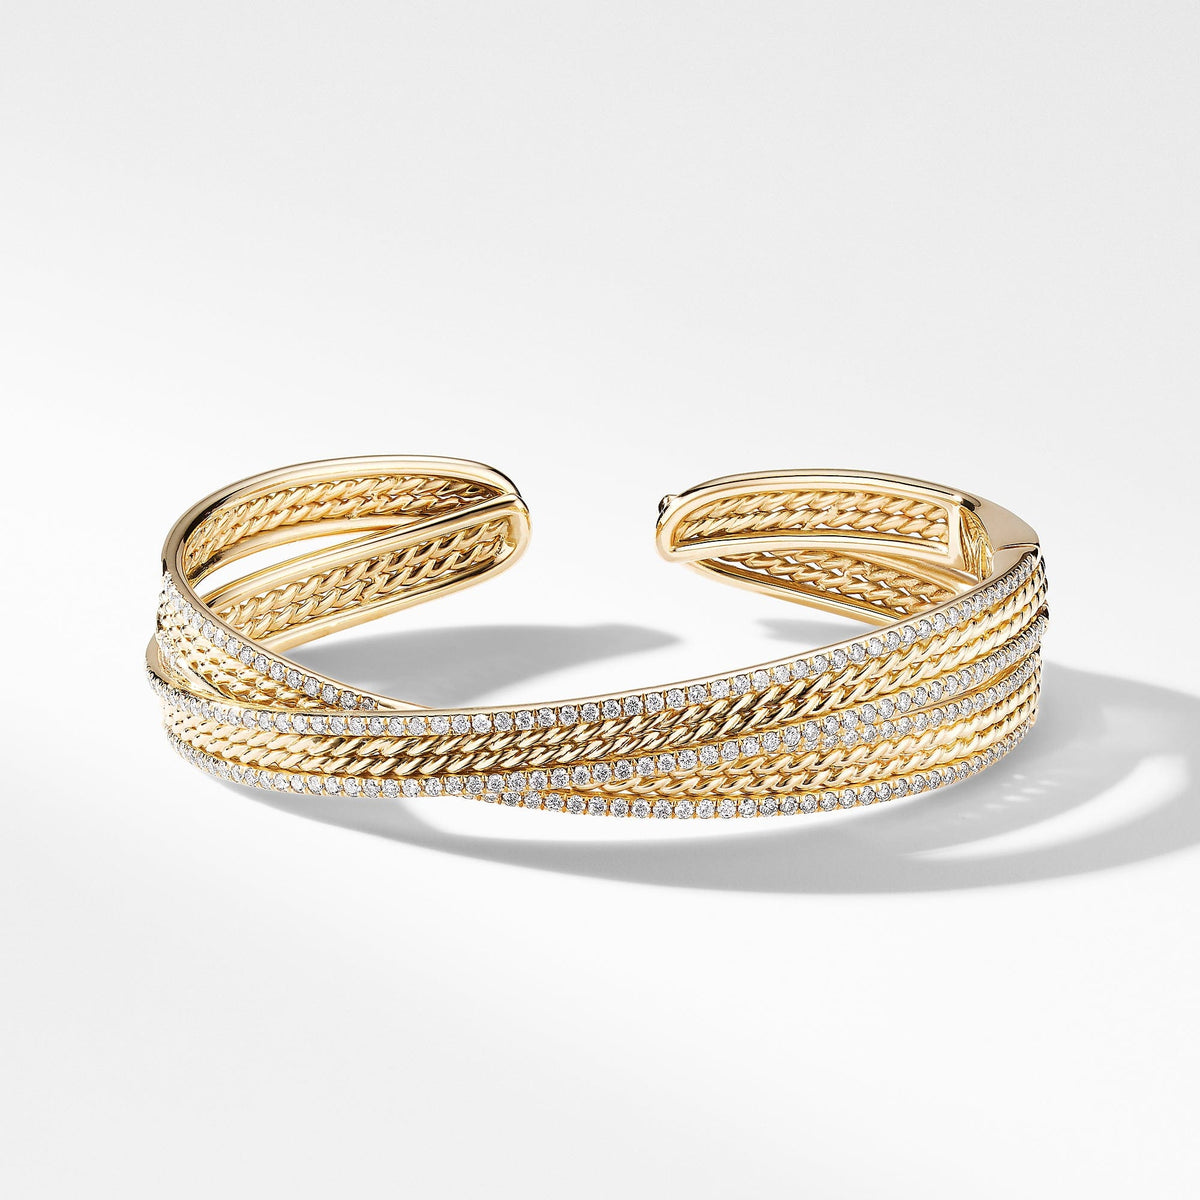 DY Origami Cuff Bracelet in 18K Yellow Gold with Pavé Diamond Rails